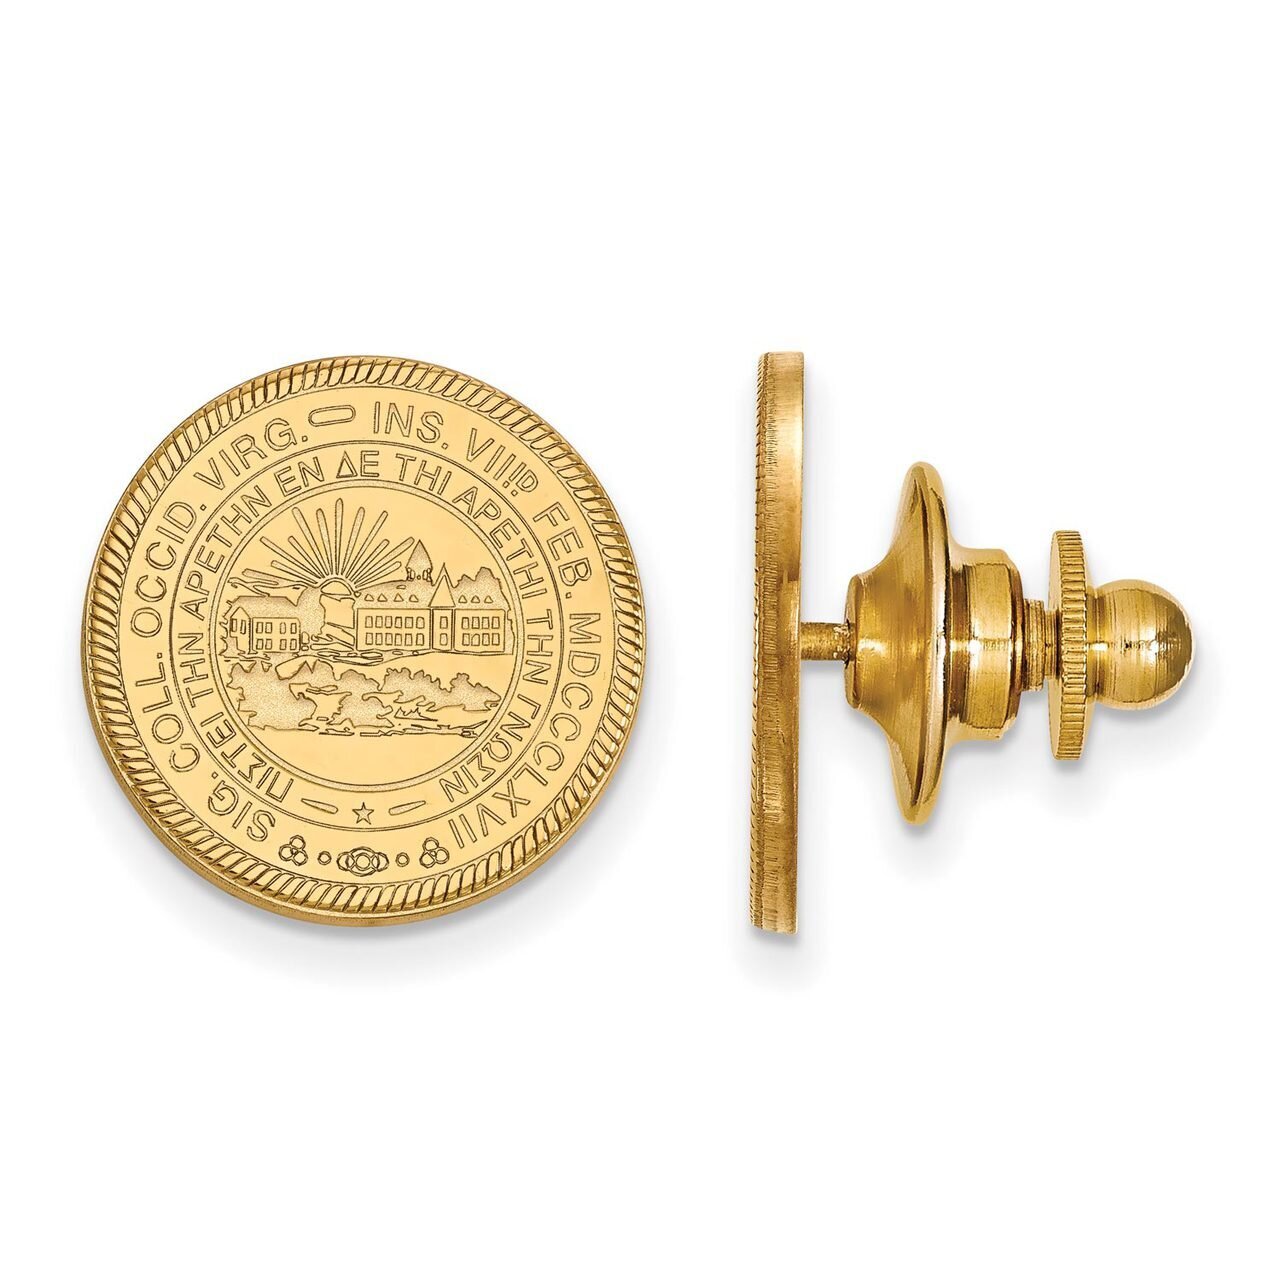 West Virginia University Crest Lapel Pin Gold-plated Silver GP051WVU